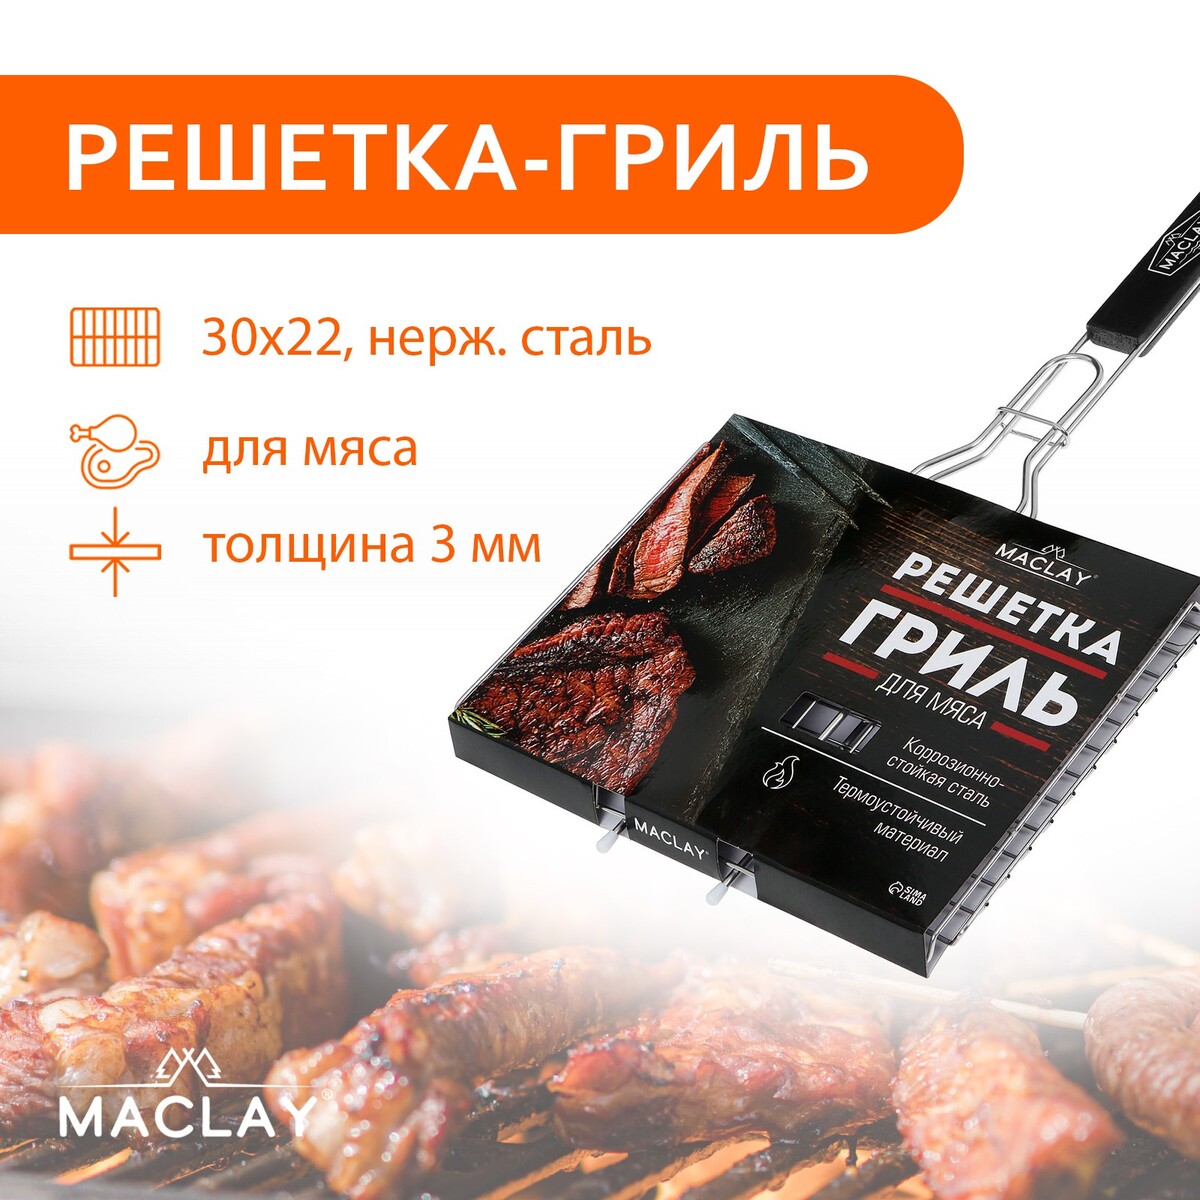 фото Решетка гриль maclay premium, 50х30х22 см, для мяса, нержавеющая сталь